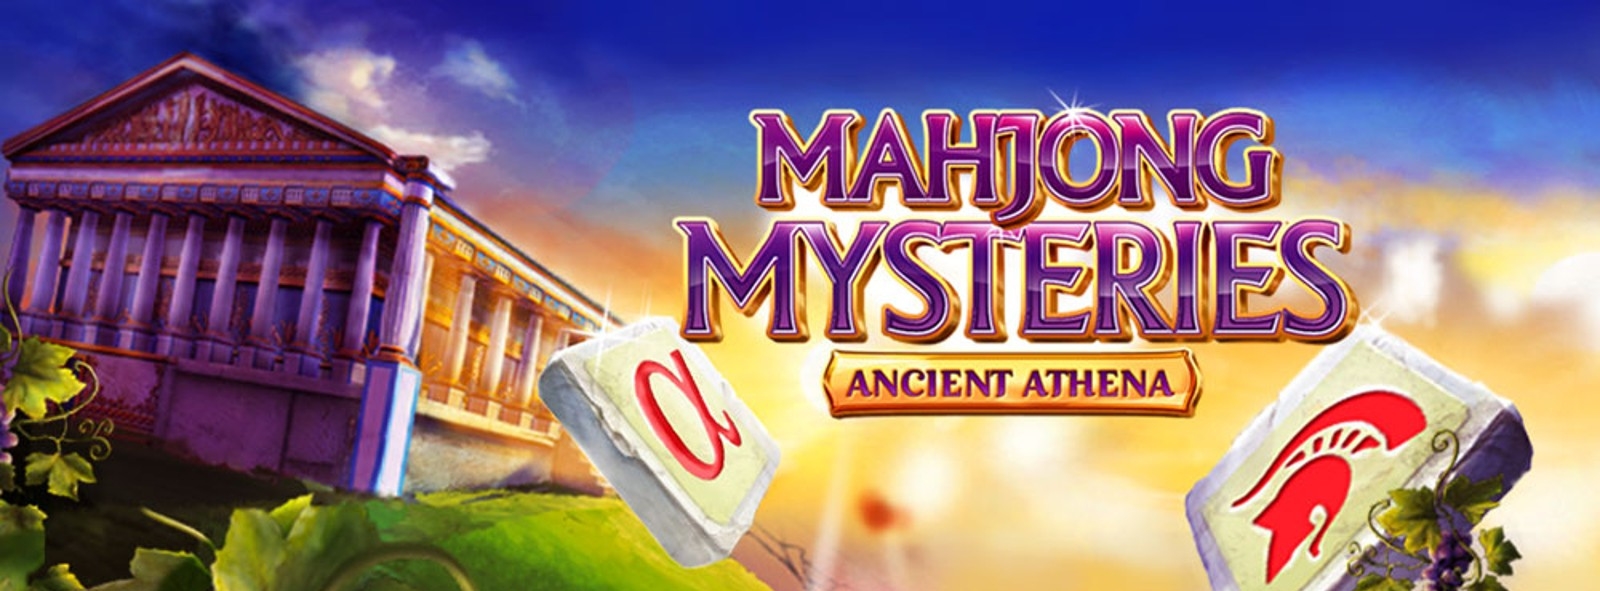 Banner Mahjong Mysteries Ancient Athena